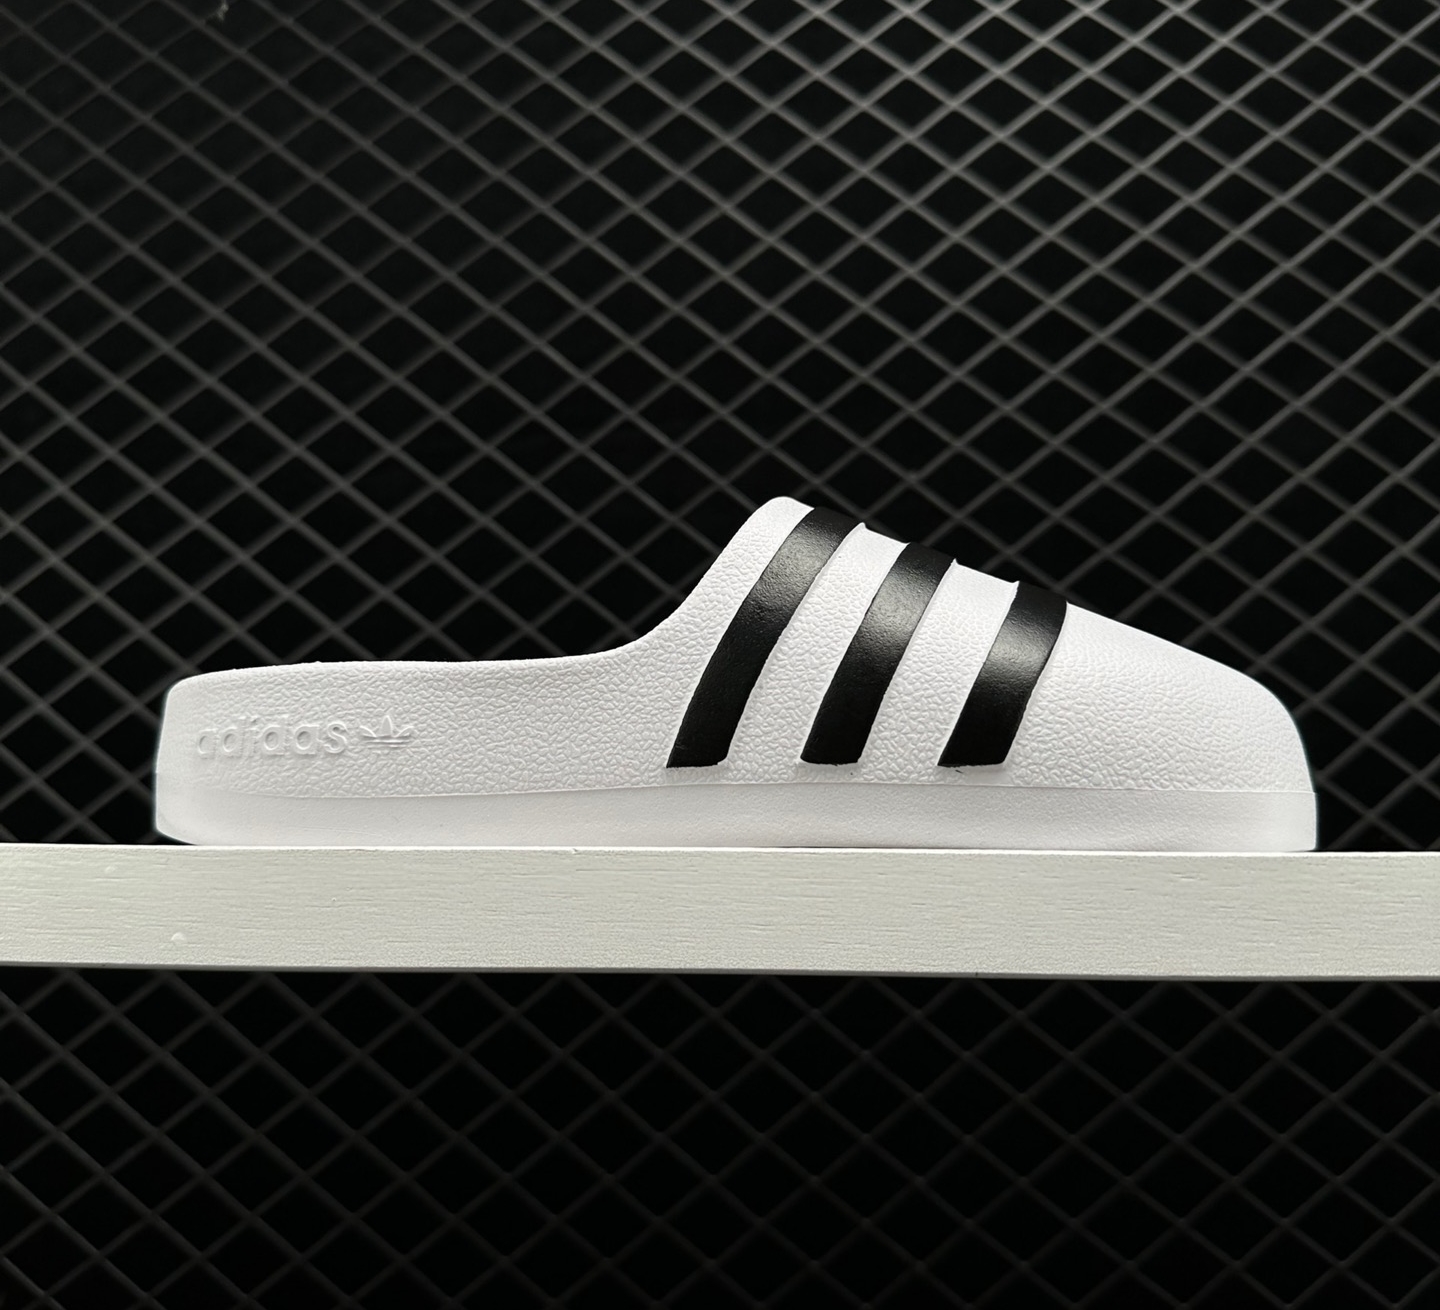 Adidas Adifom Adilette Slide 'White Black' HQ7219 - Stylish and Comfortable Slide Sandals